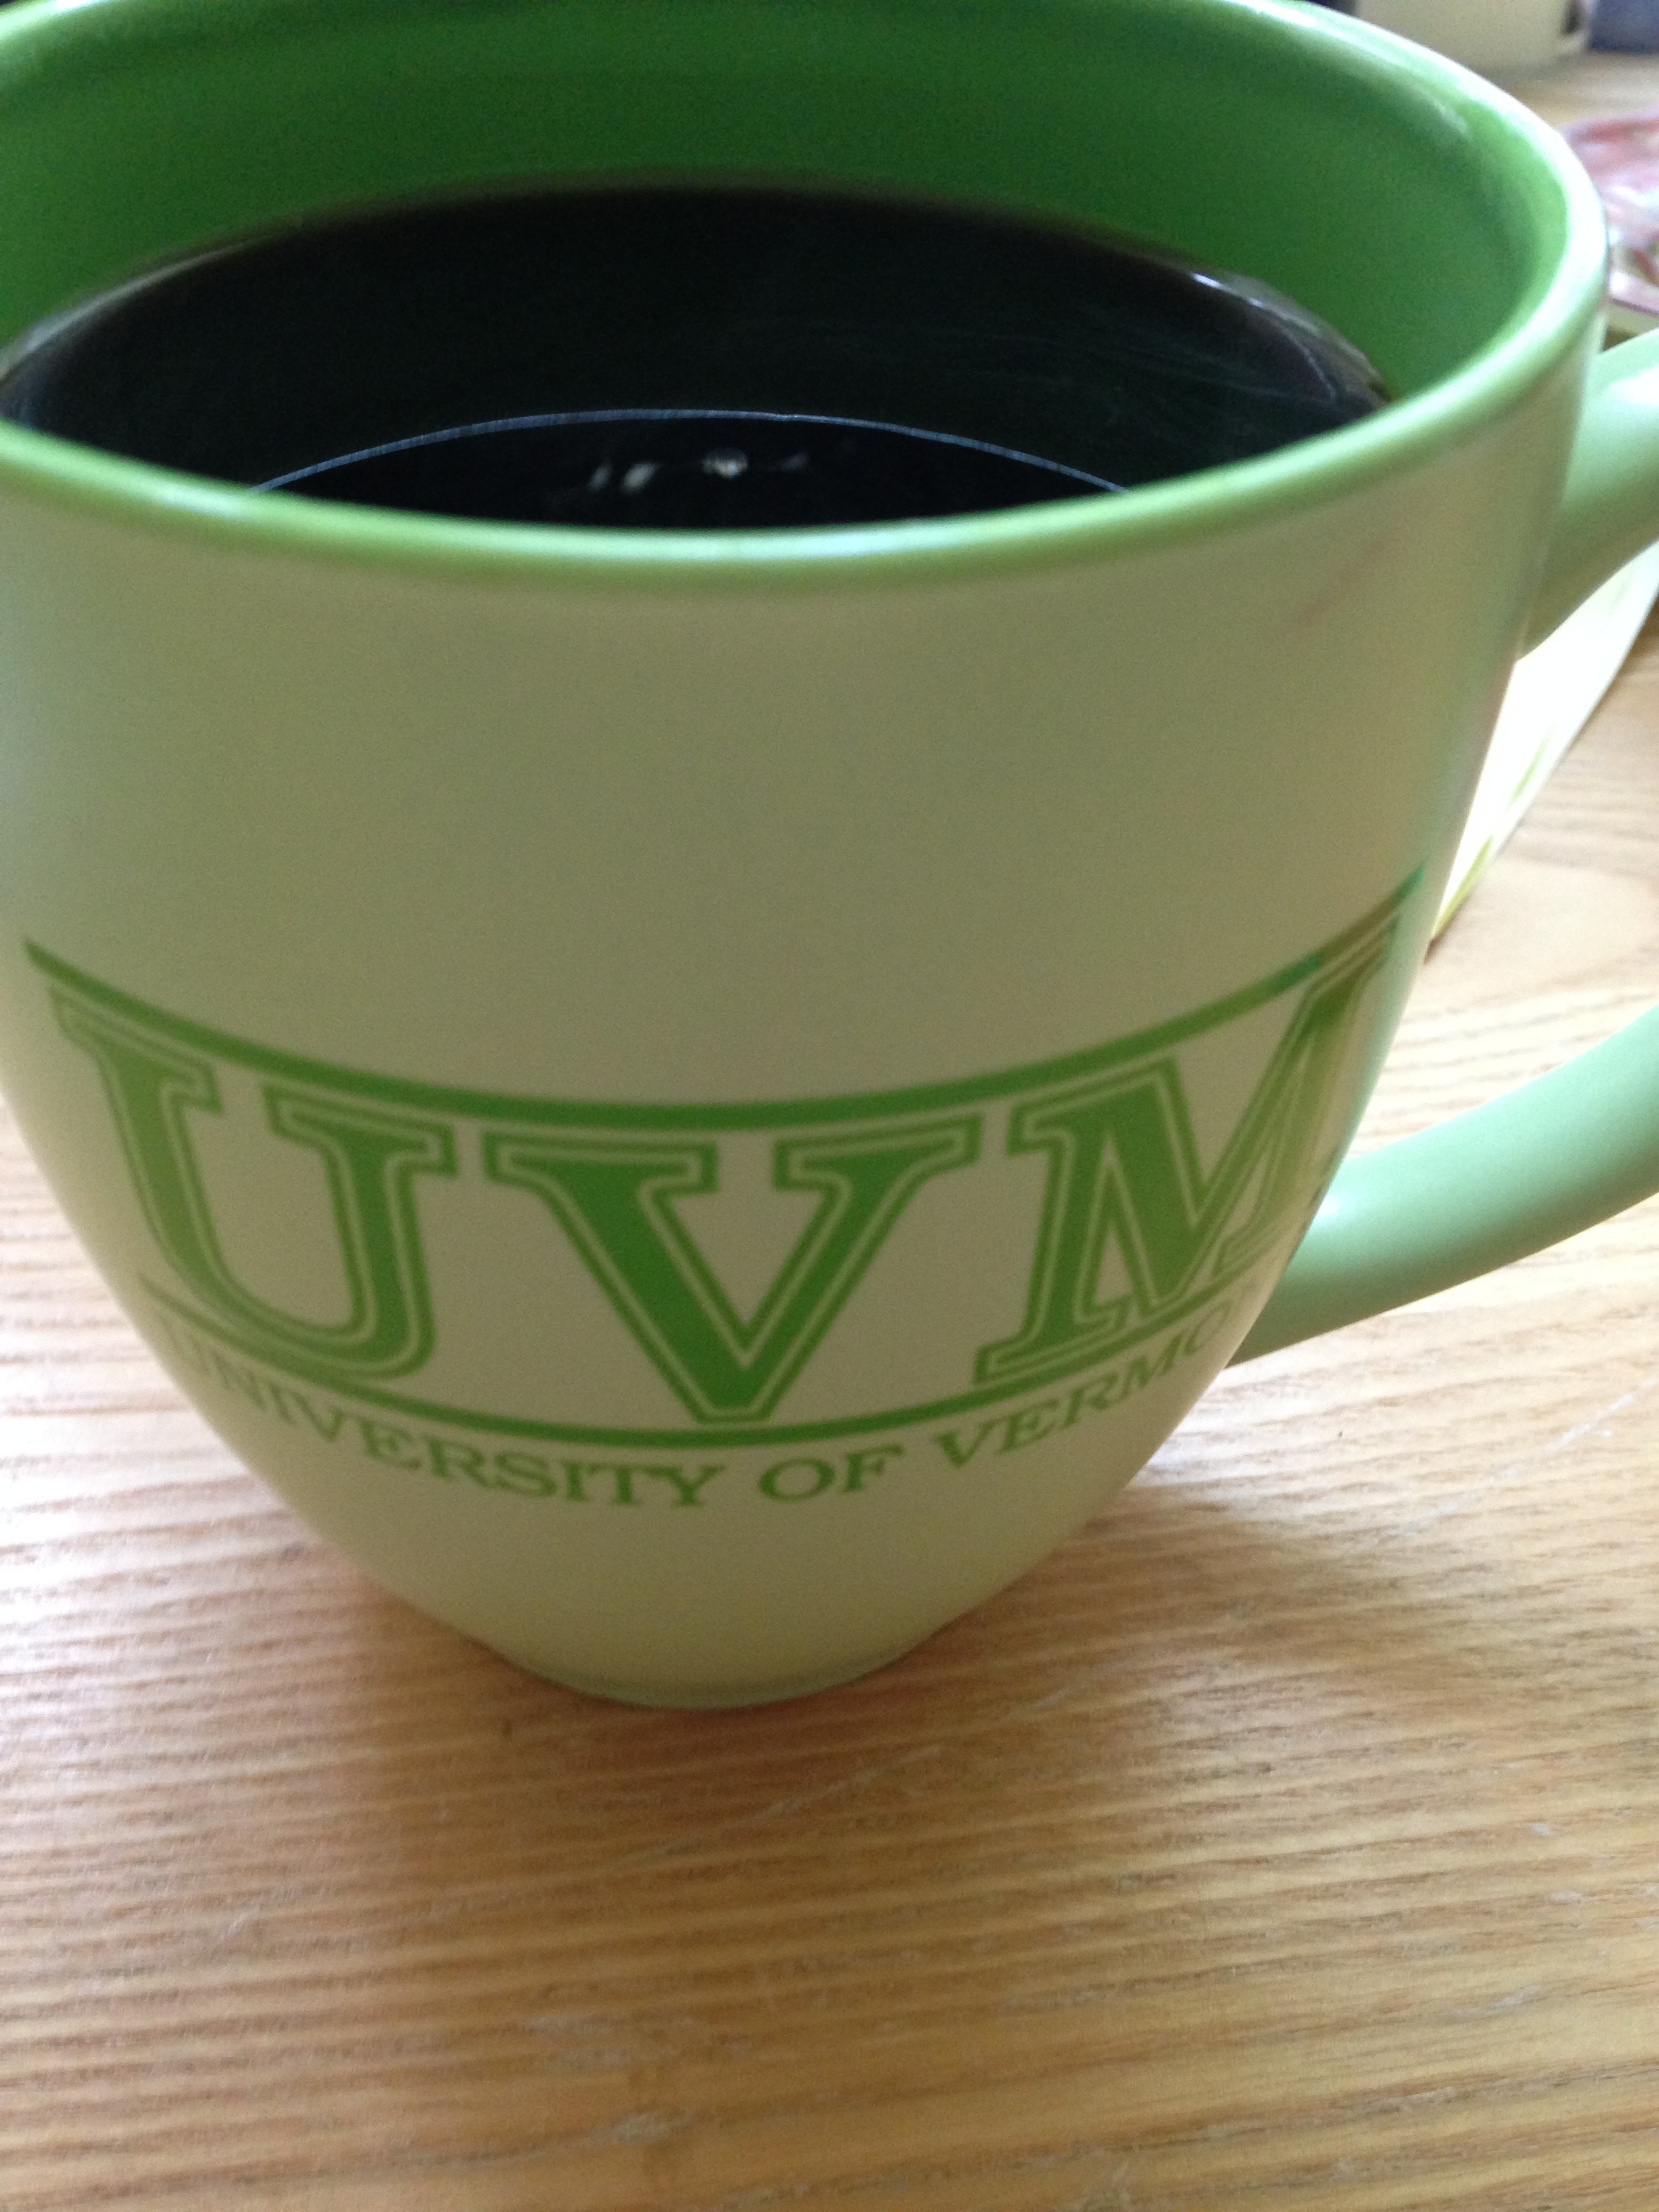 Black Birch Tea in UVM mug